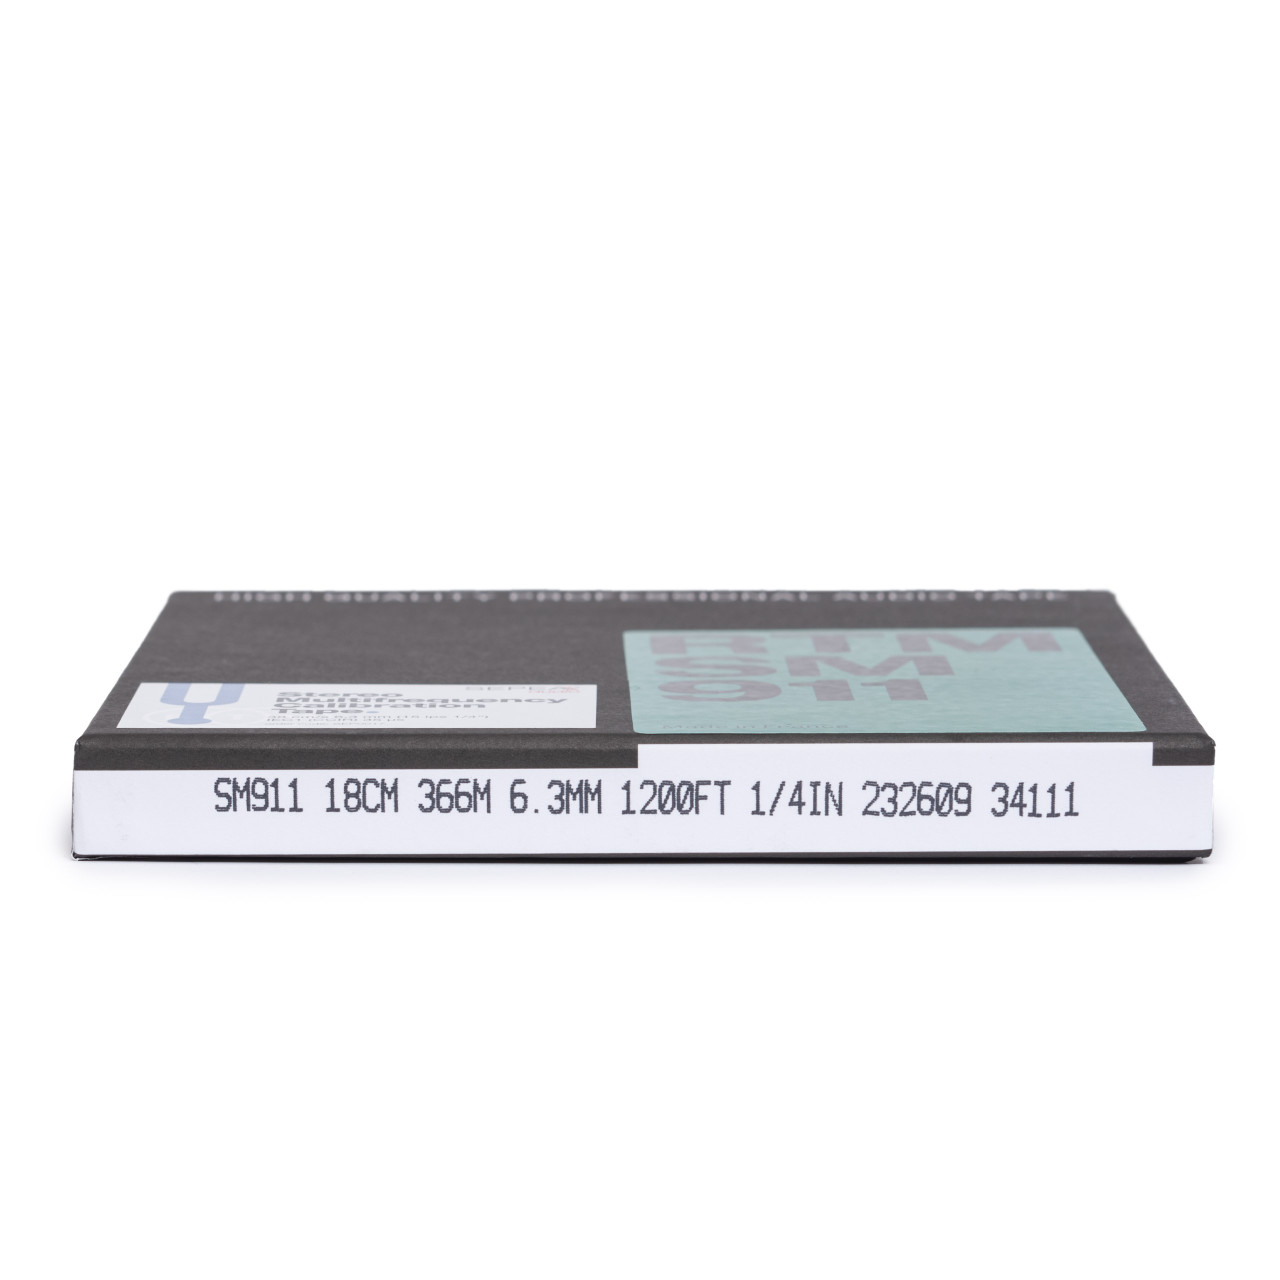 Single Calibrated Tape Measures — Calibration Station